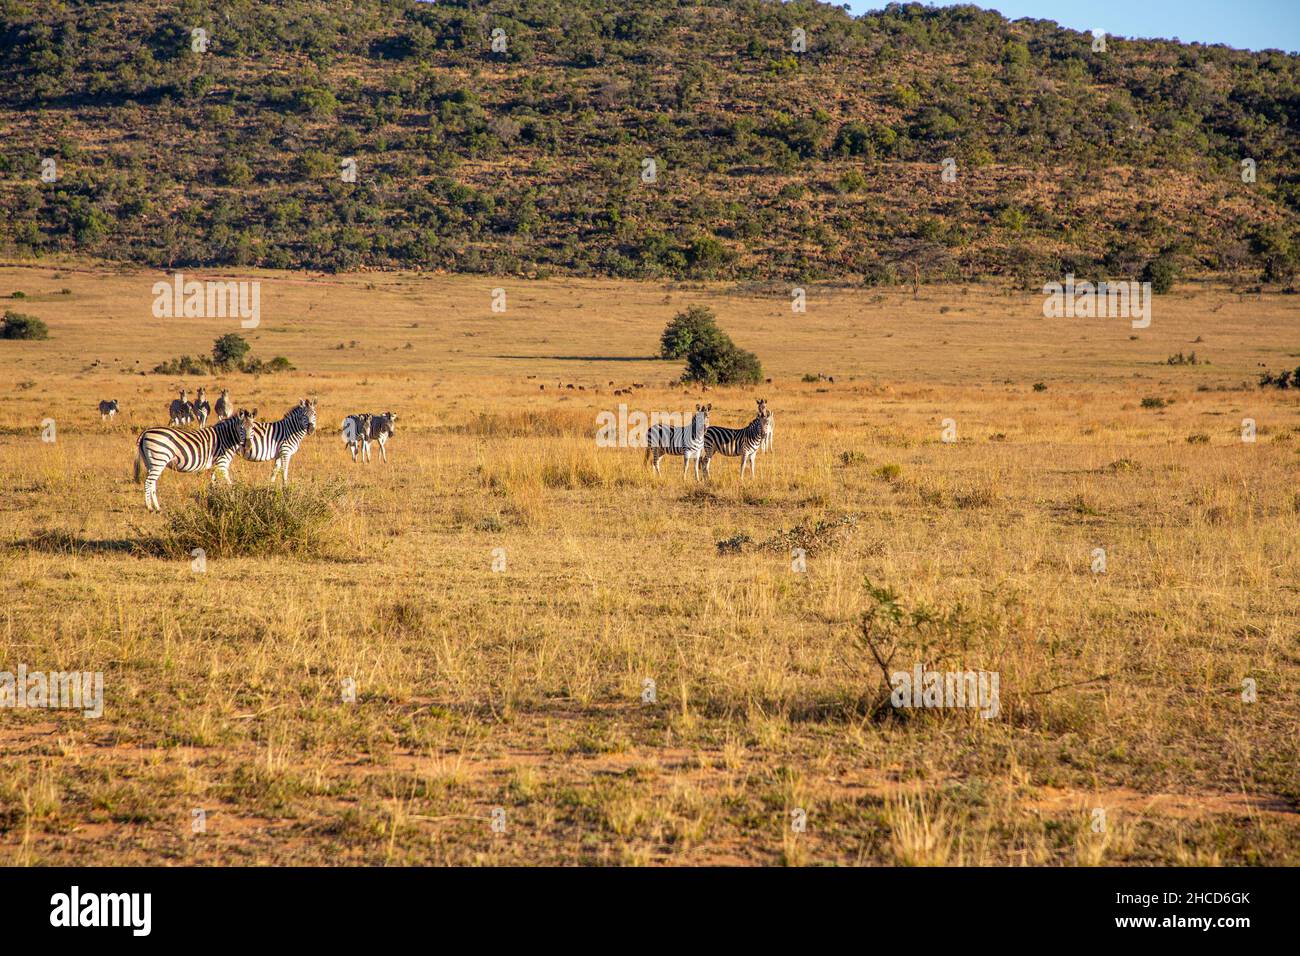 Wild Zebras Roam the Fields of Africa Stock Photo